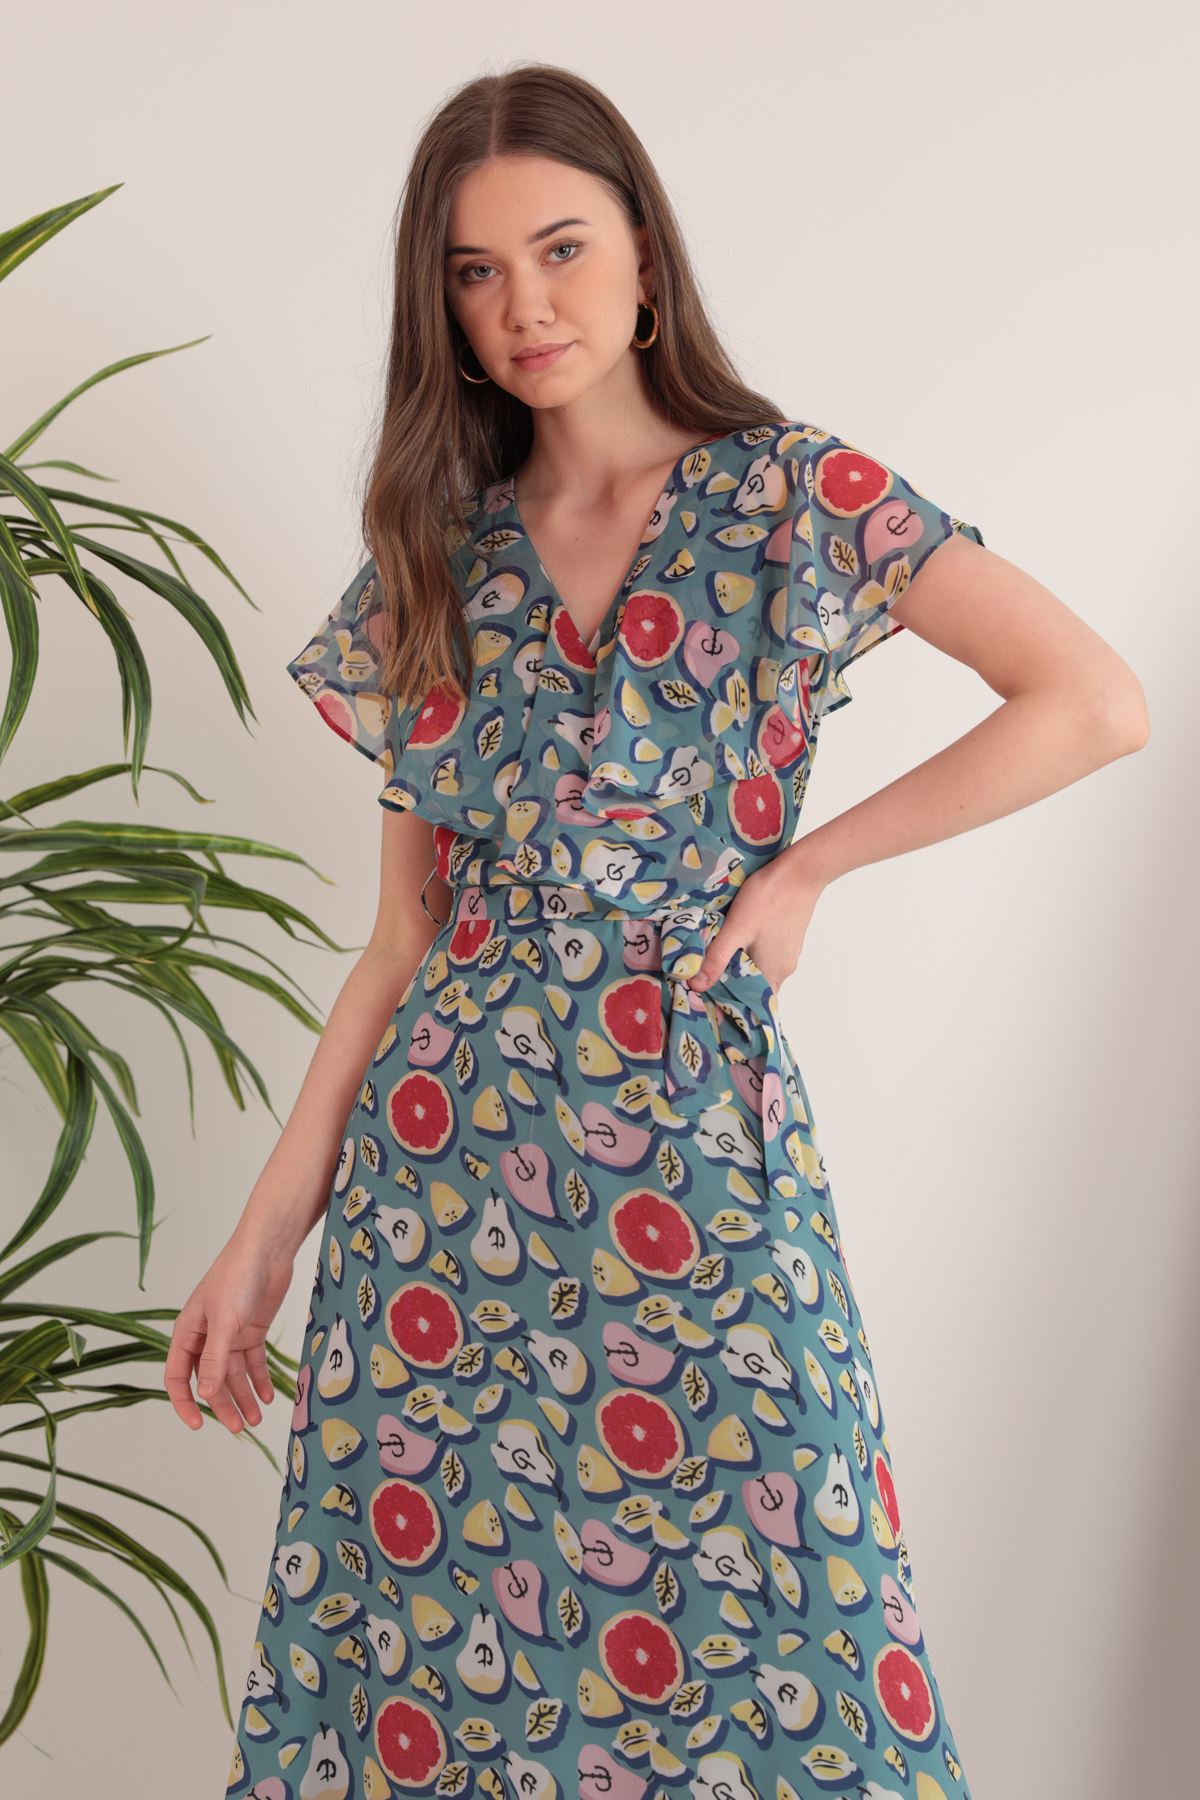 Chiffon Fabric Mixed Fruit Pattern Aller Women's Dress-Green